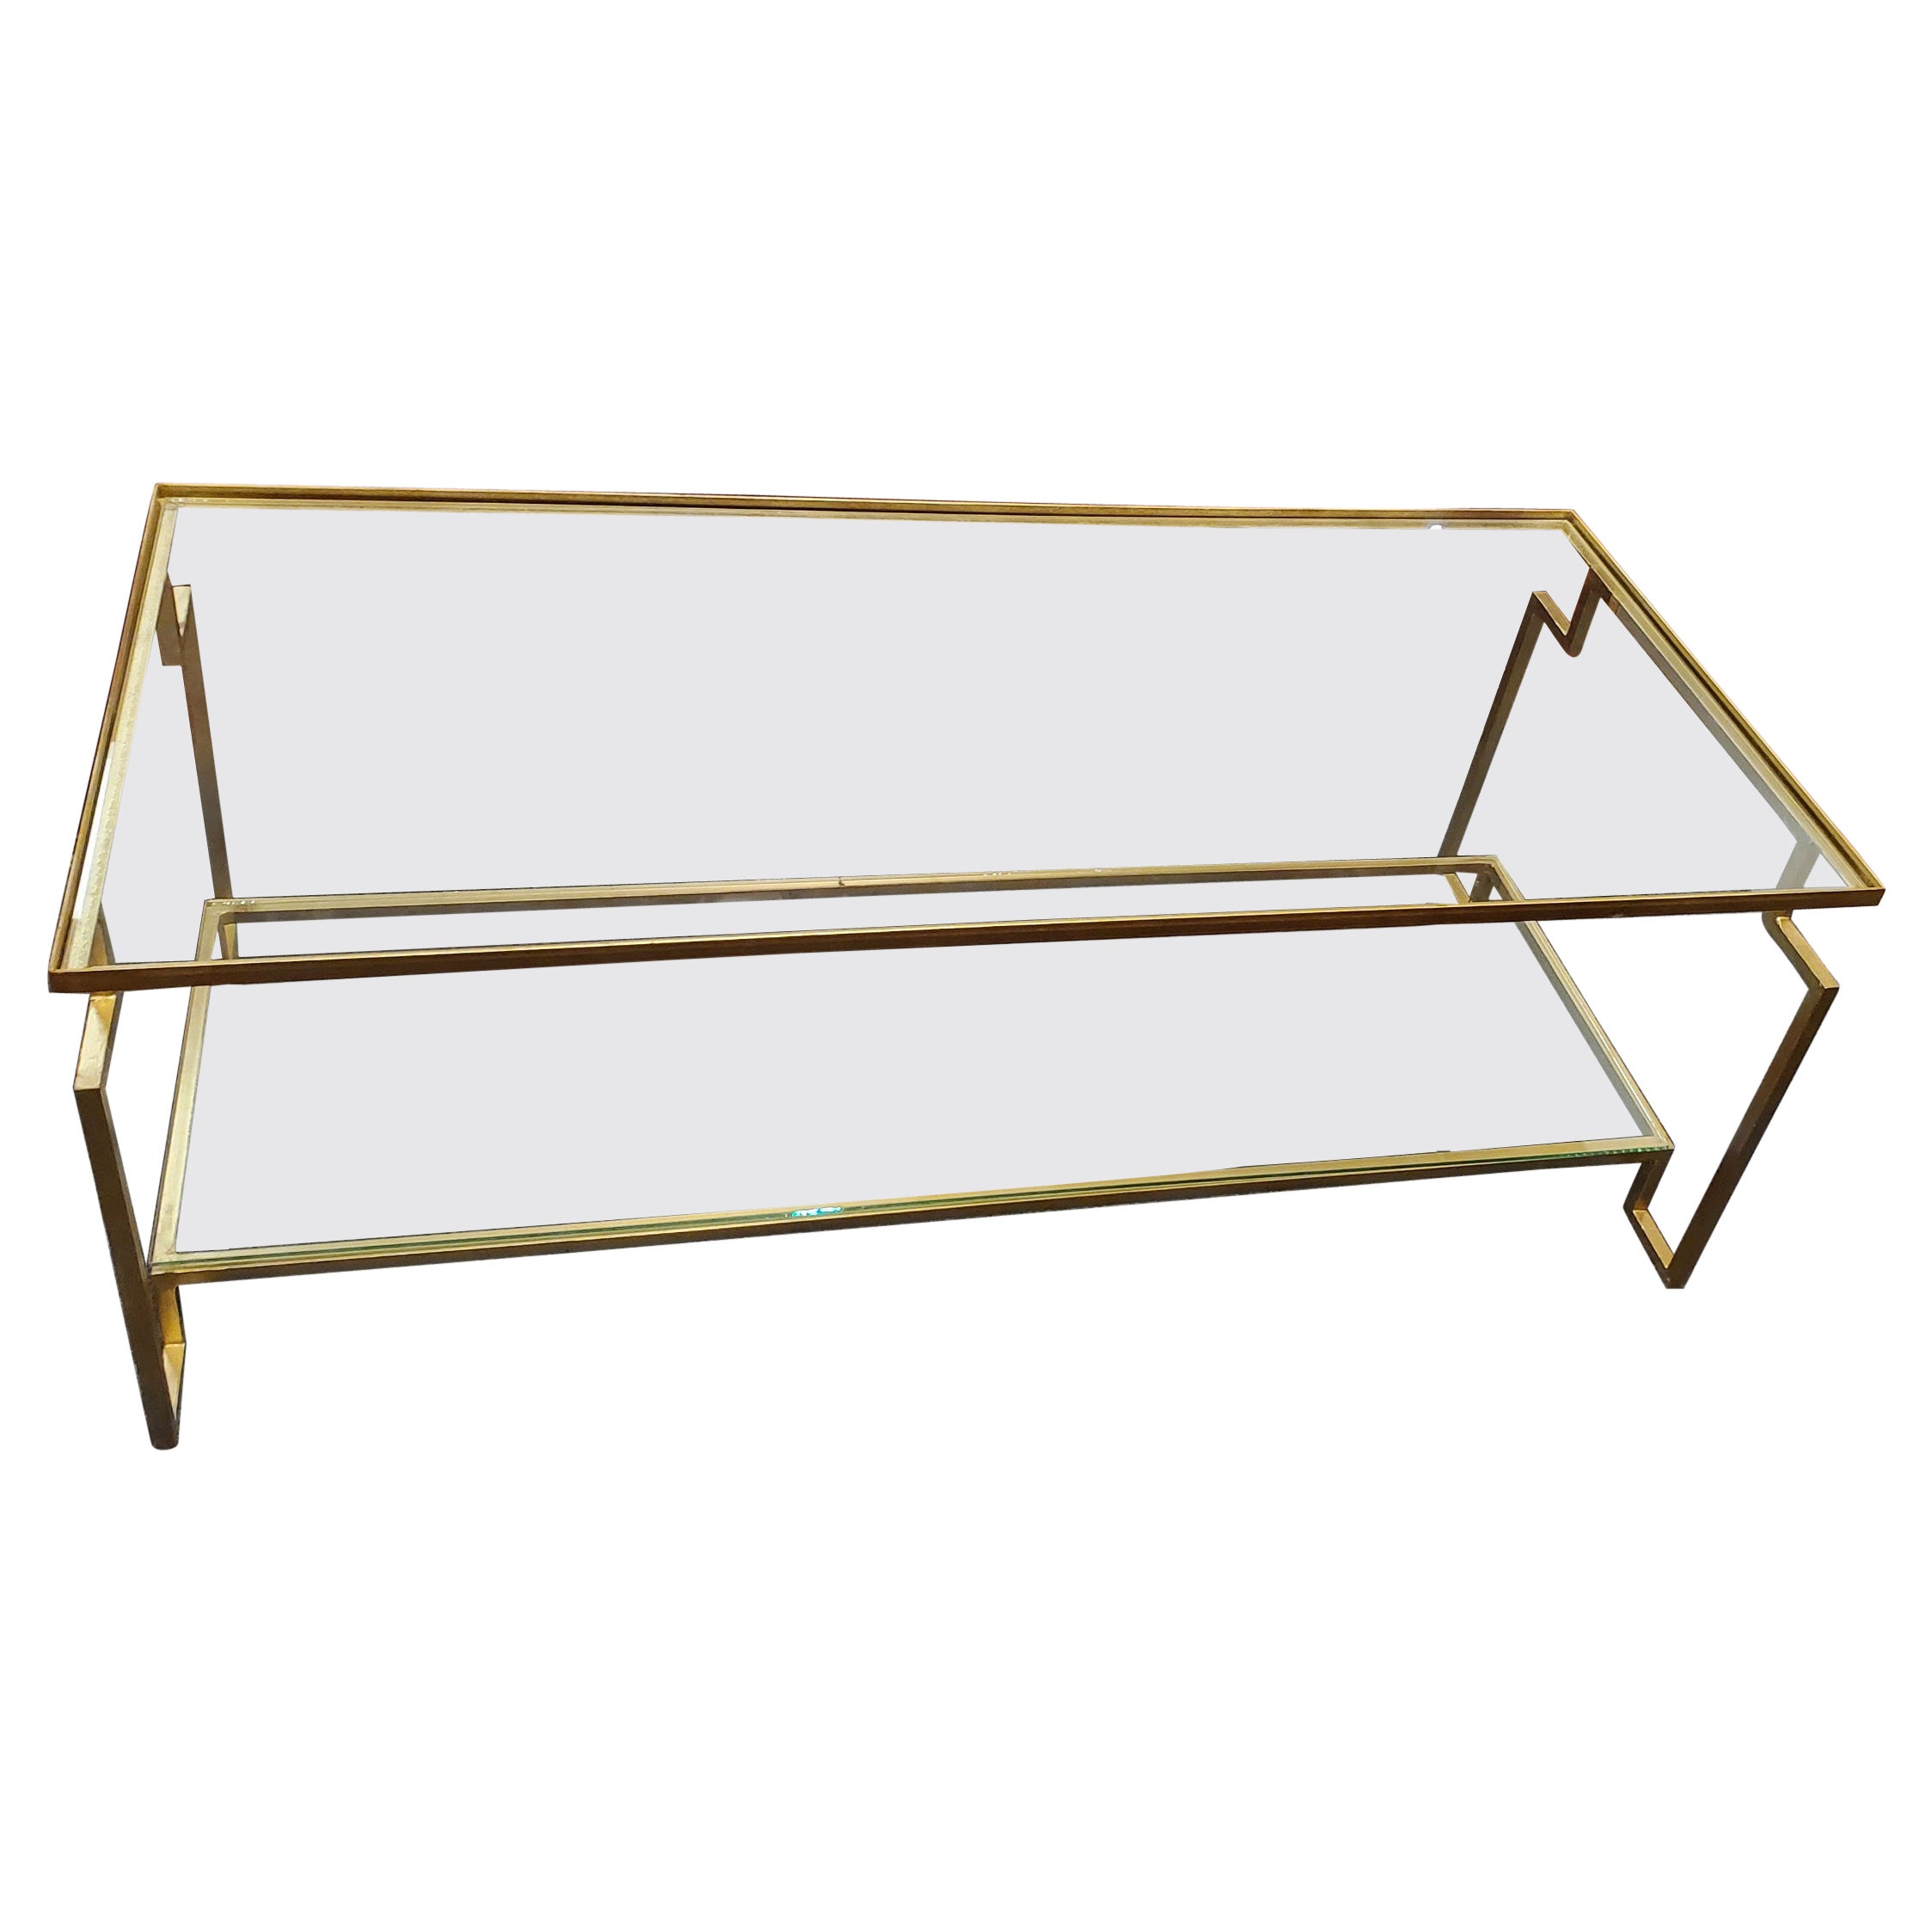 Post Modern Style “Apollo” Gilt Metal Coffee Table with Glass Top & Bottom Shelf For Sale